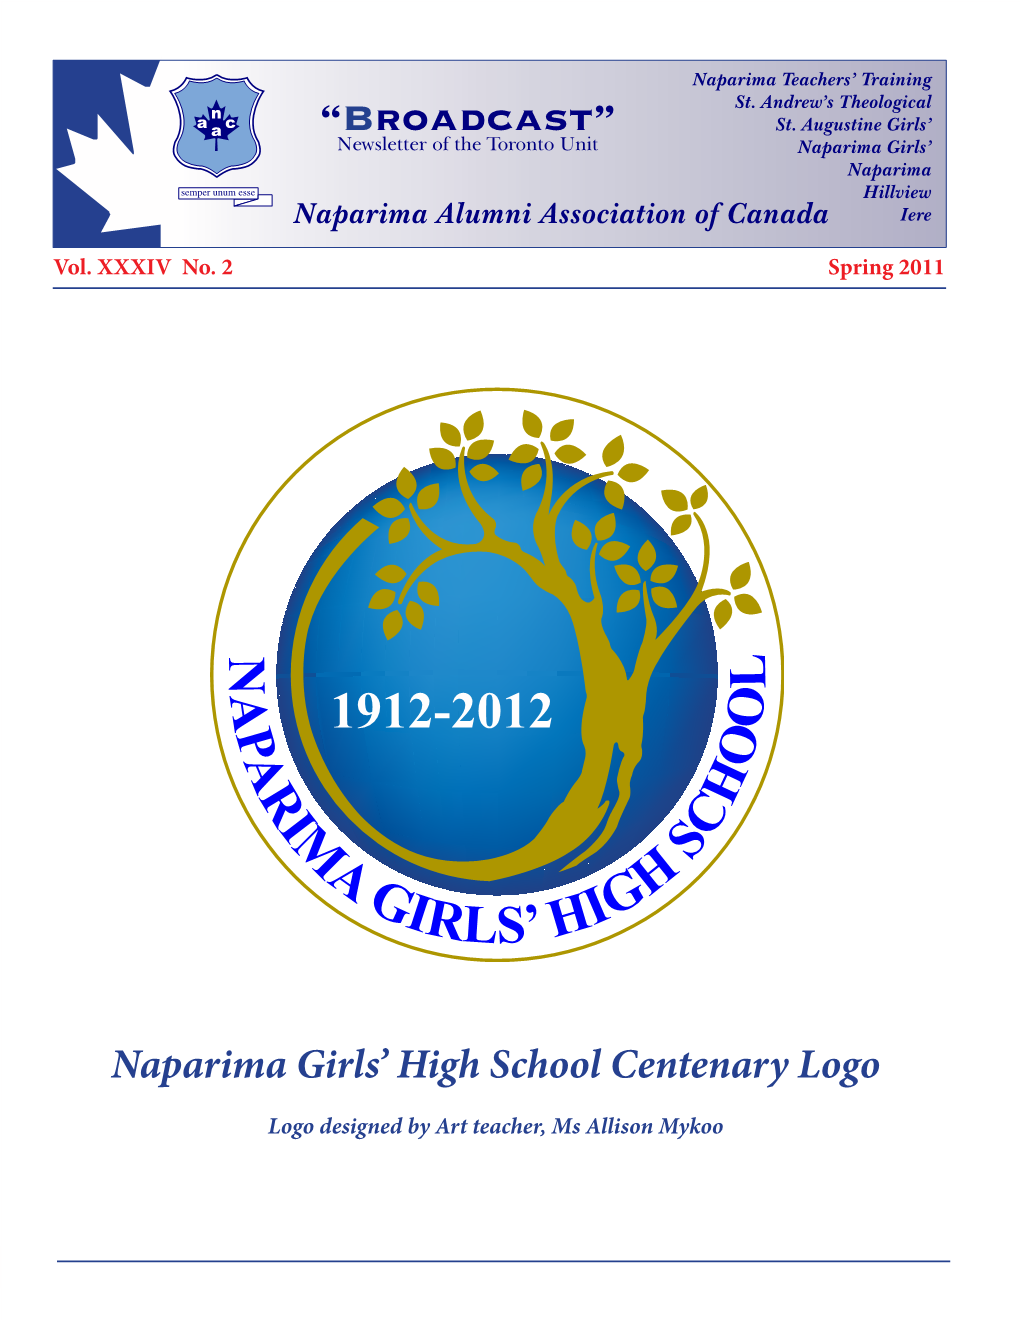 Naparima Girls' High School Centenary Logo